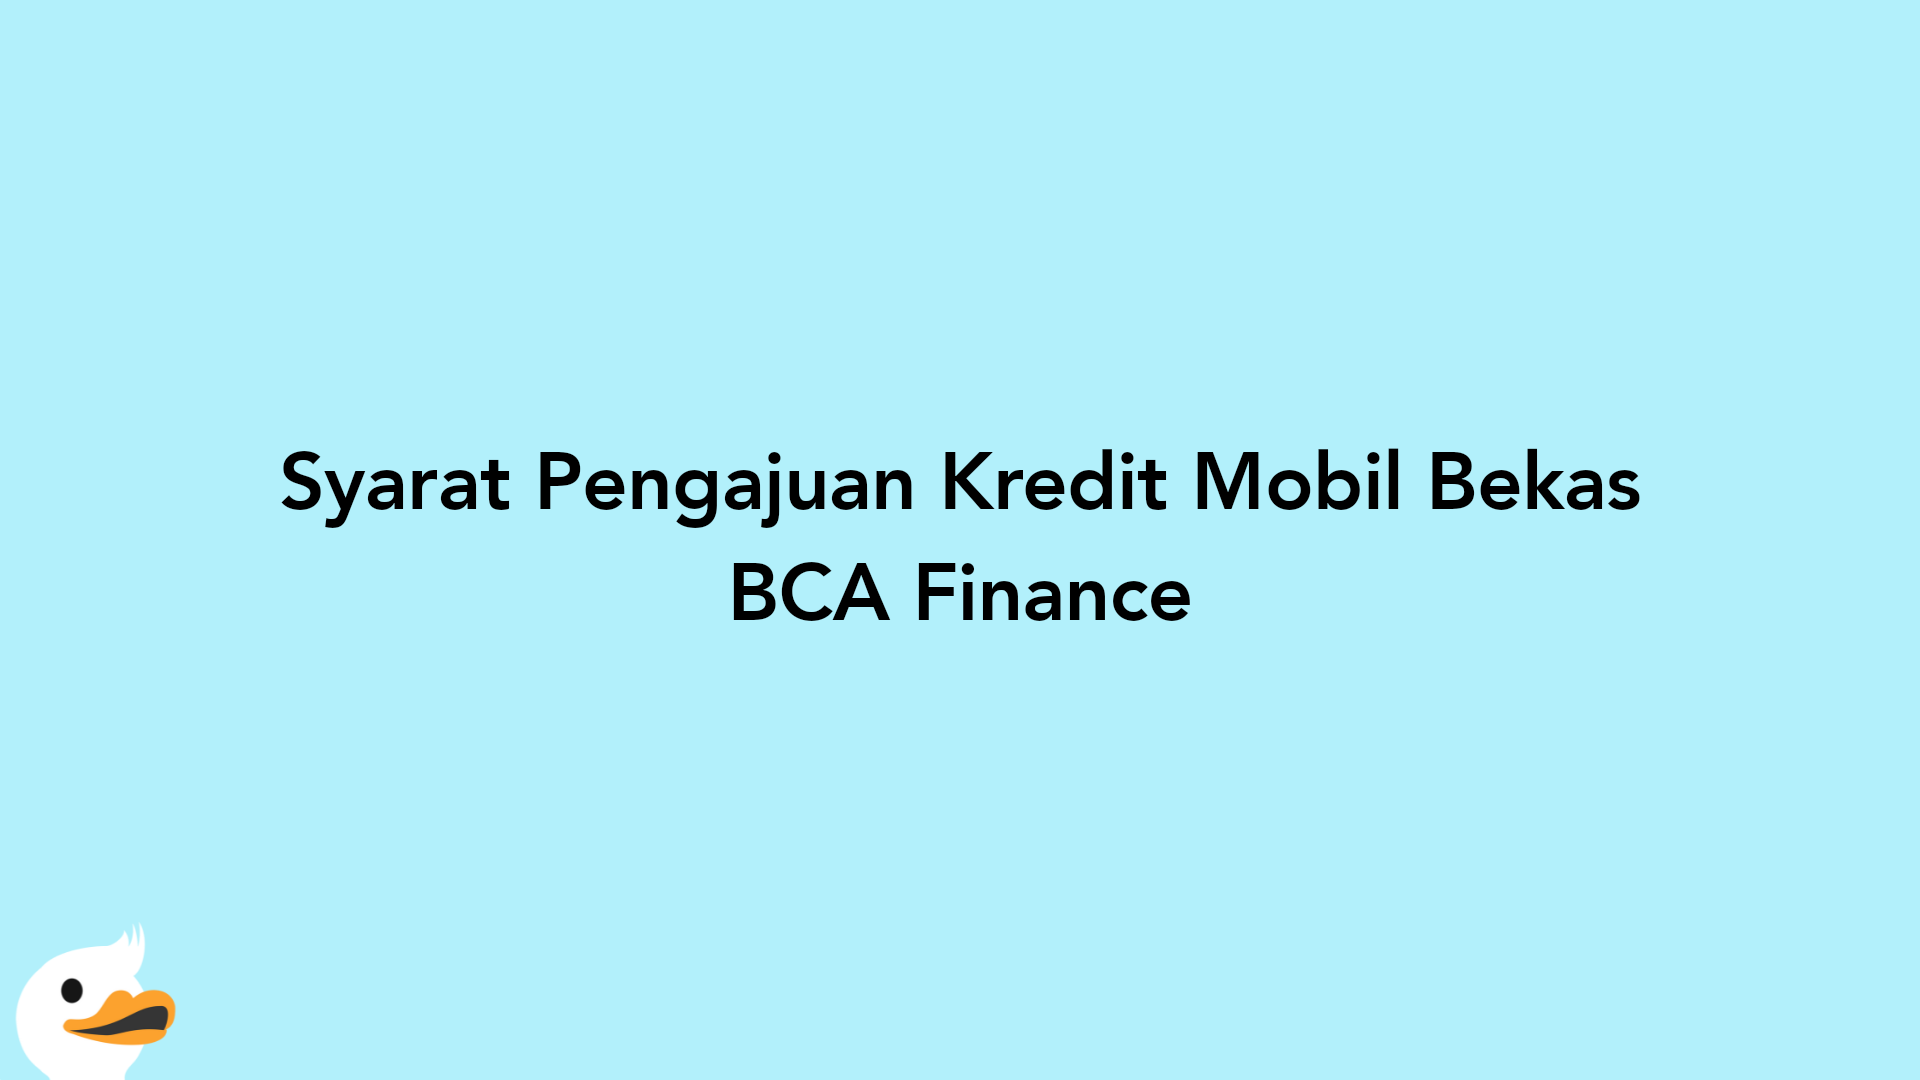 Syarat Pengajuan Kredit Mobil Bekas BCA Finance